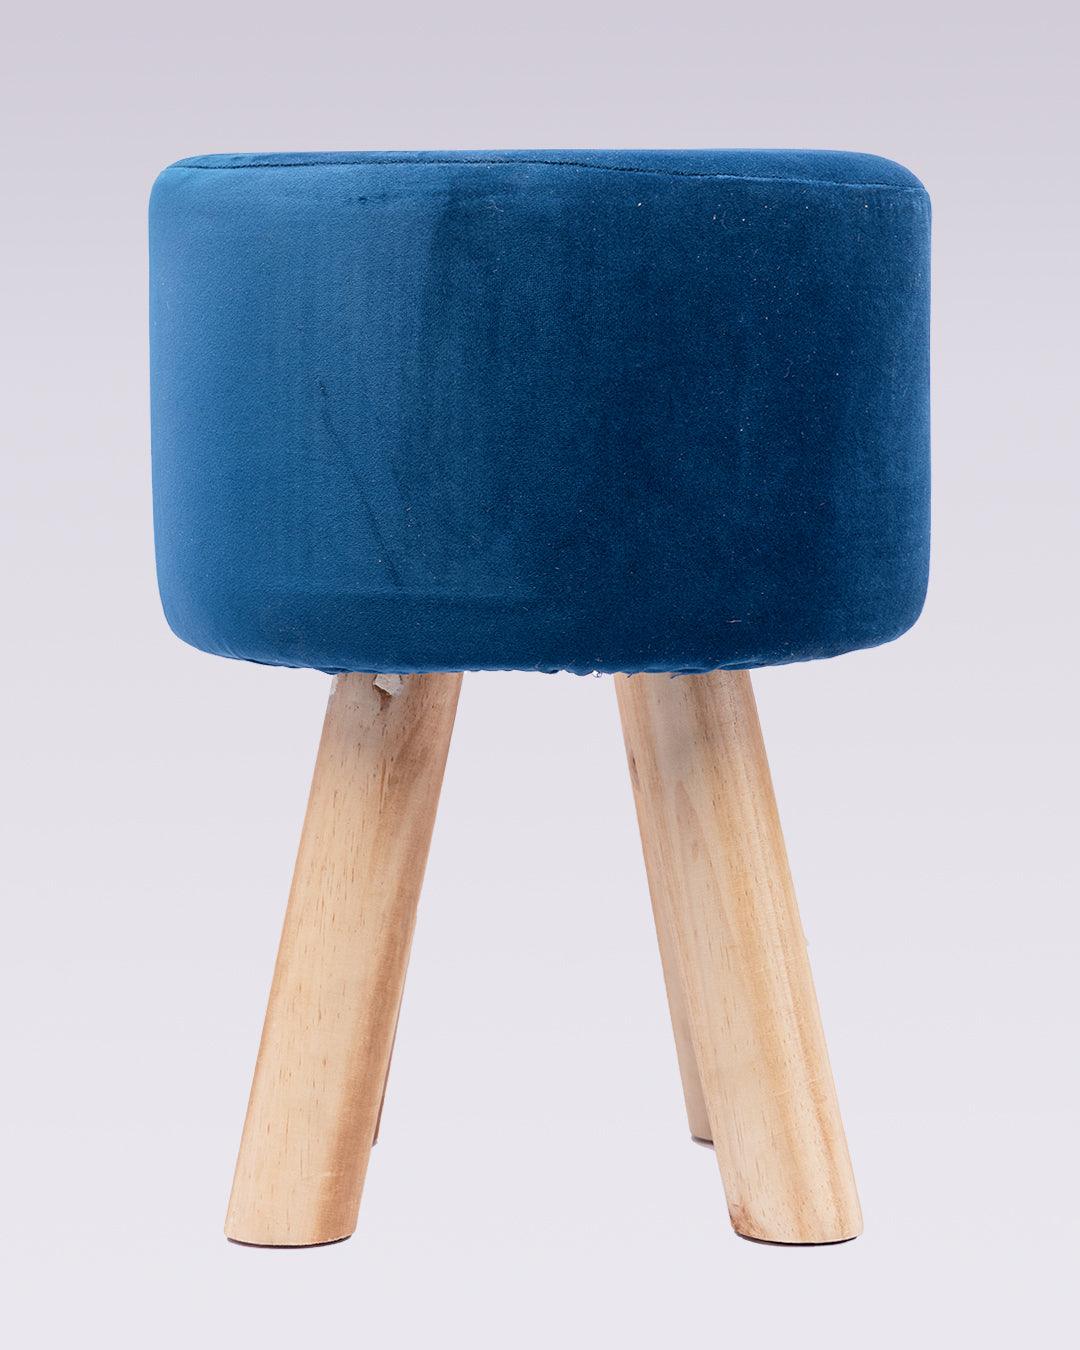 Market99 Four Legged Wooden Footstool, Ottoman, Navy Blue, Velvet, Wood - MARKET 99